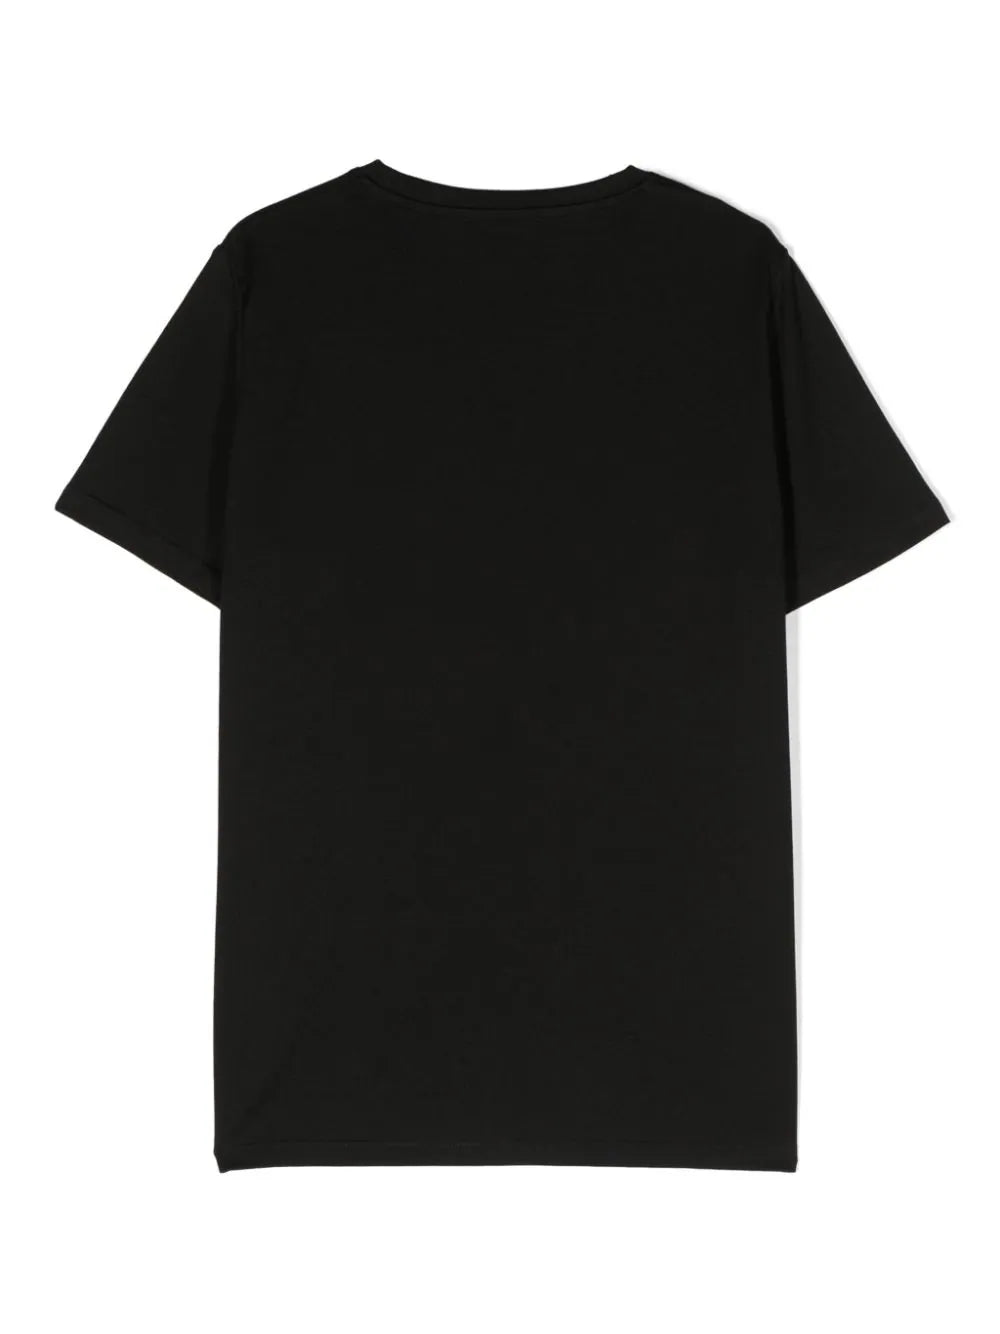 VERSACE KIDS Boys Logo-embroidered Cotton T-shirt Black - MAISONDEFASHION.COM